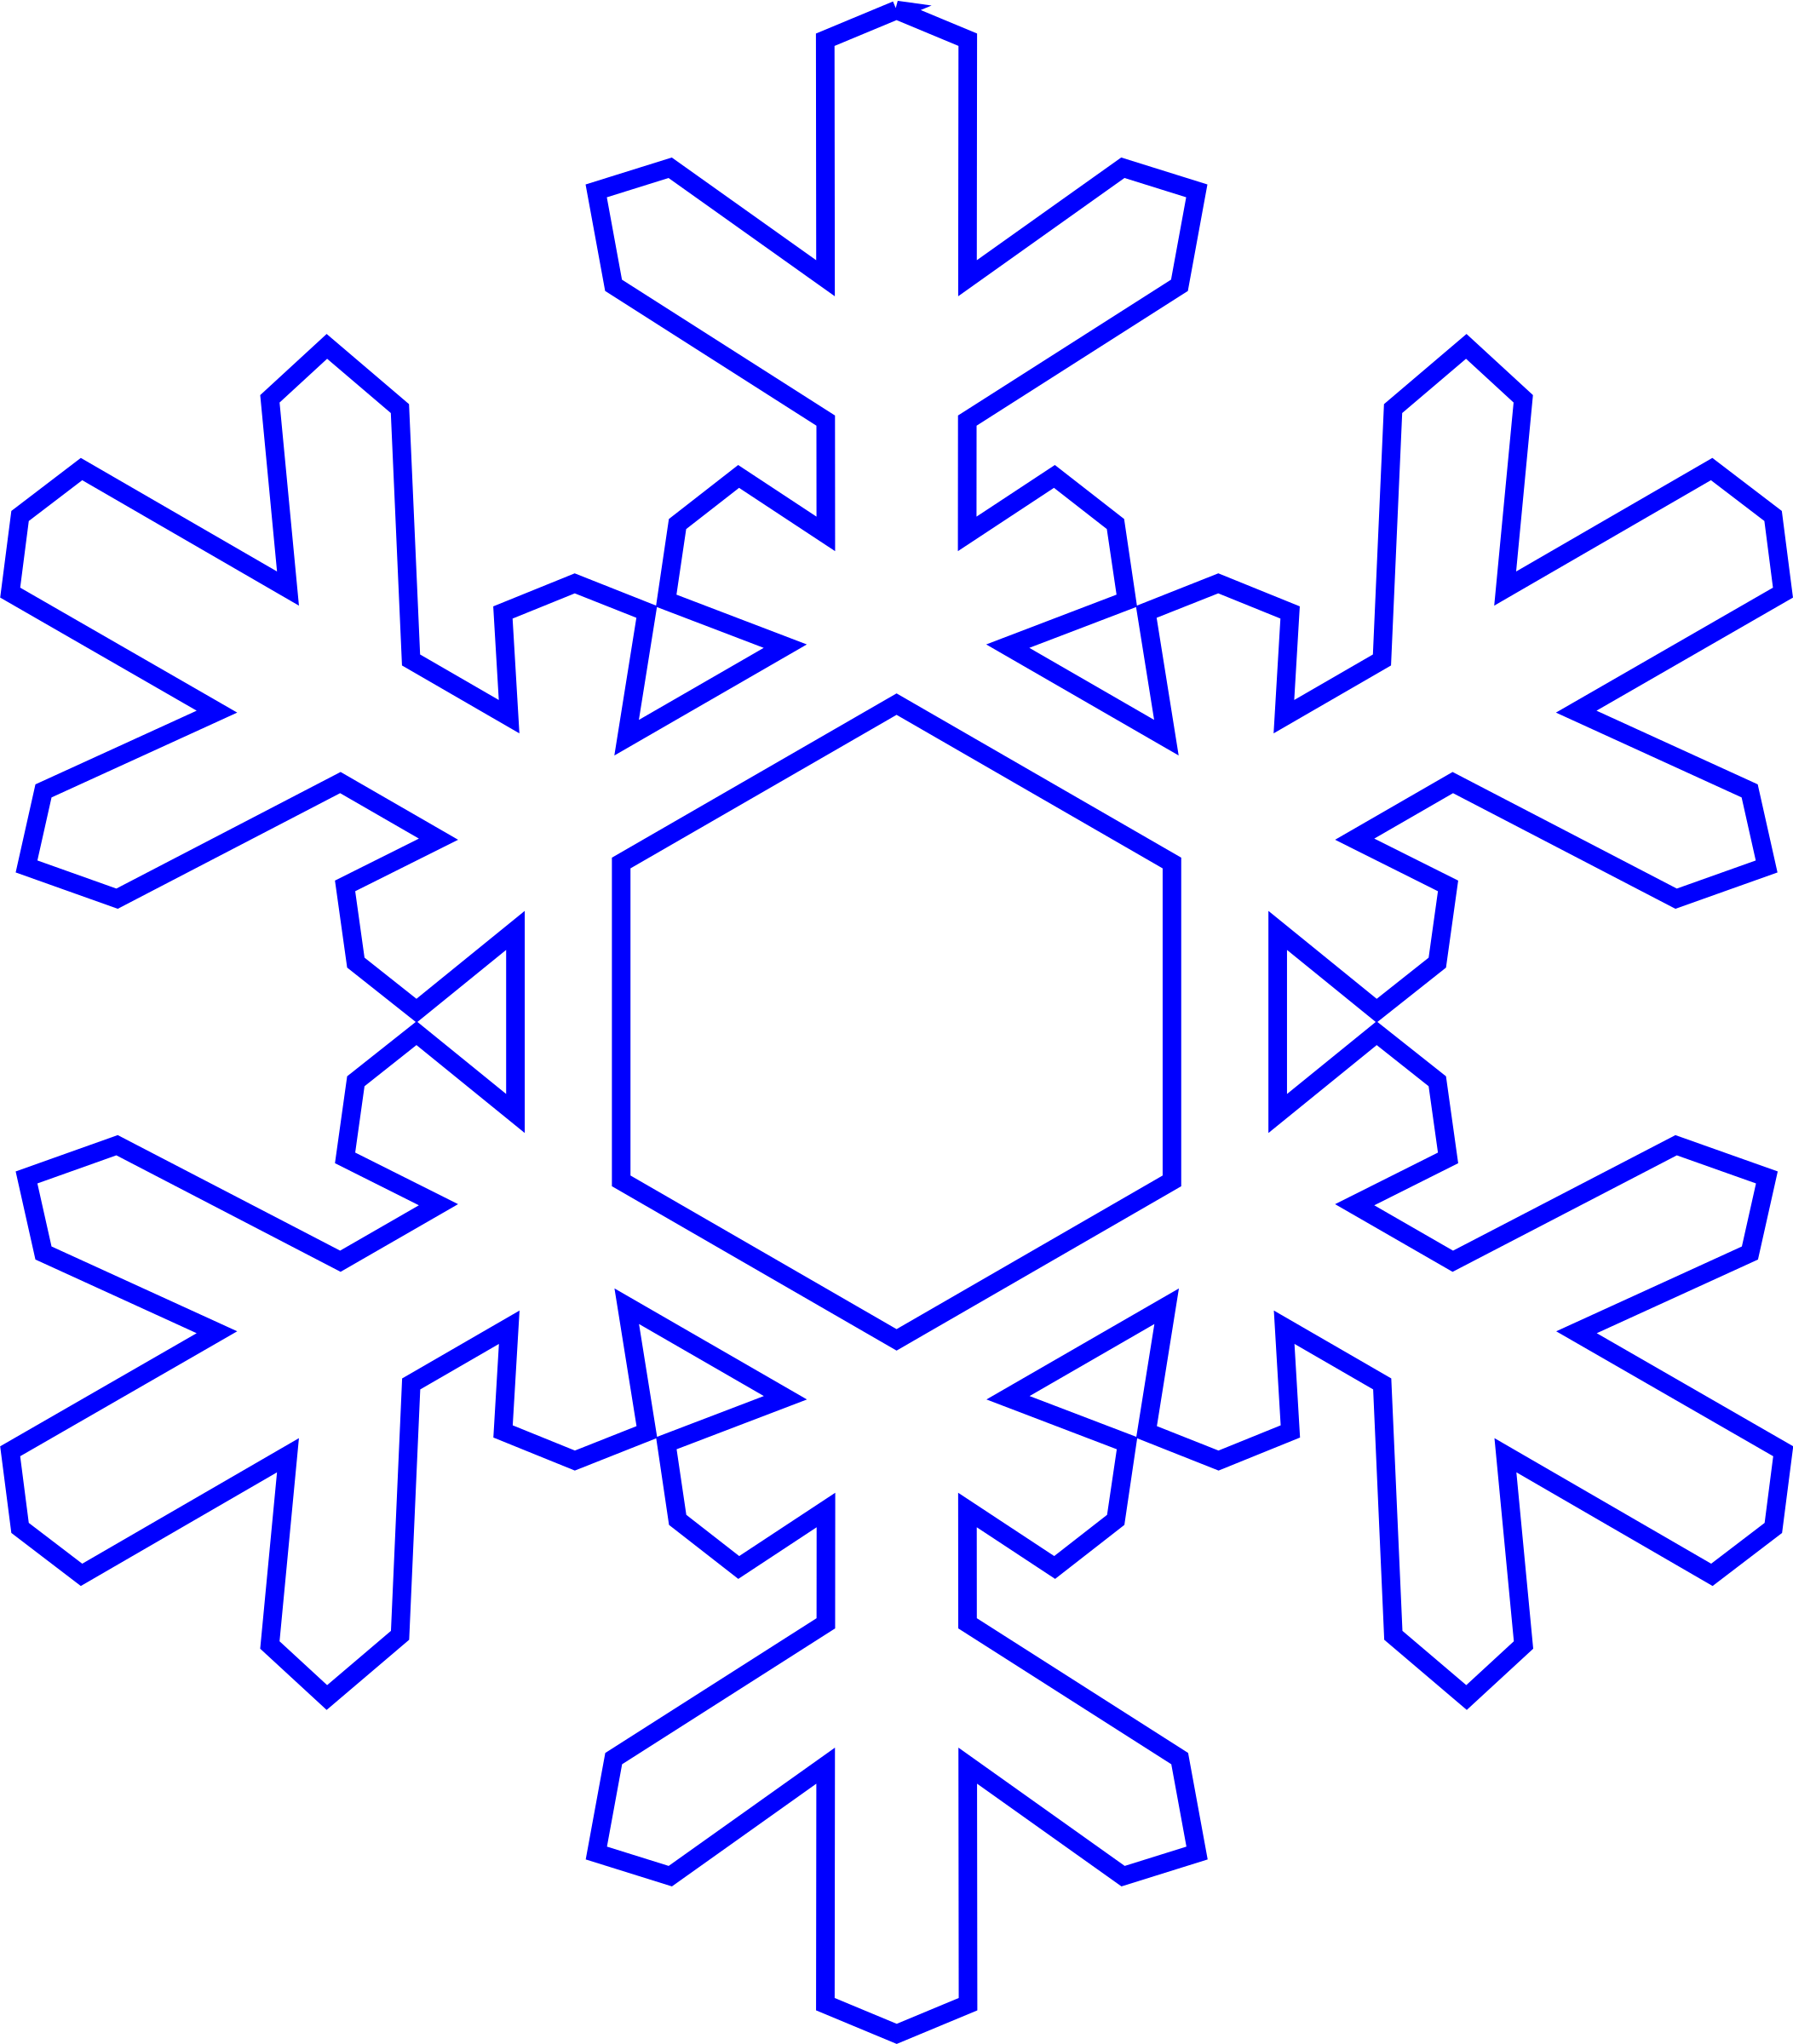 Snowflake Vector Graphic - Free Public Domain Stock Photo